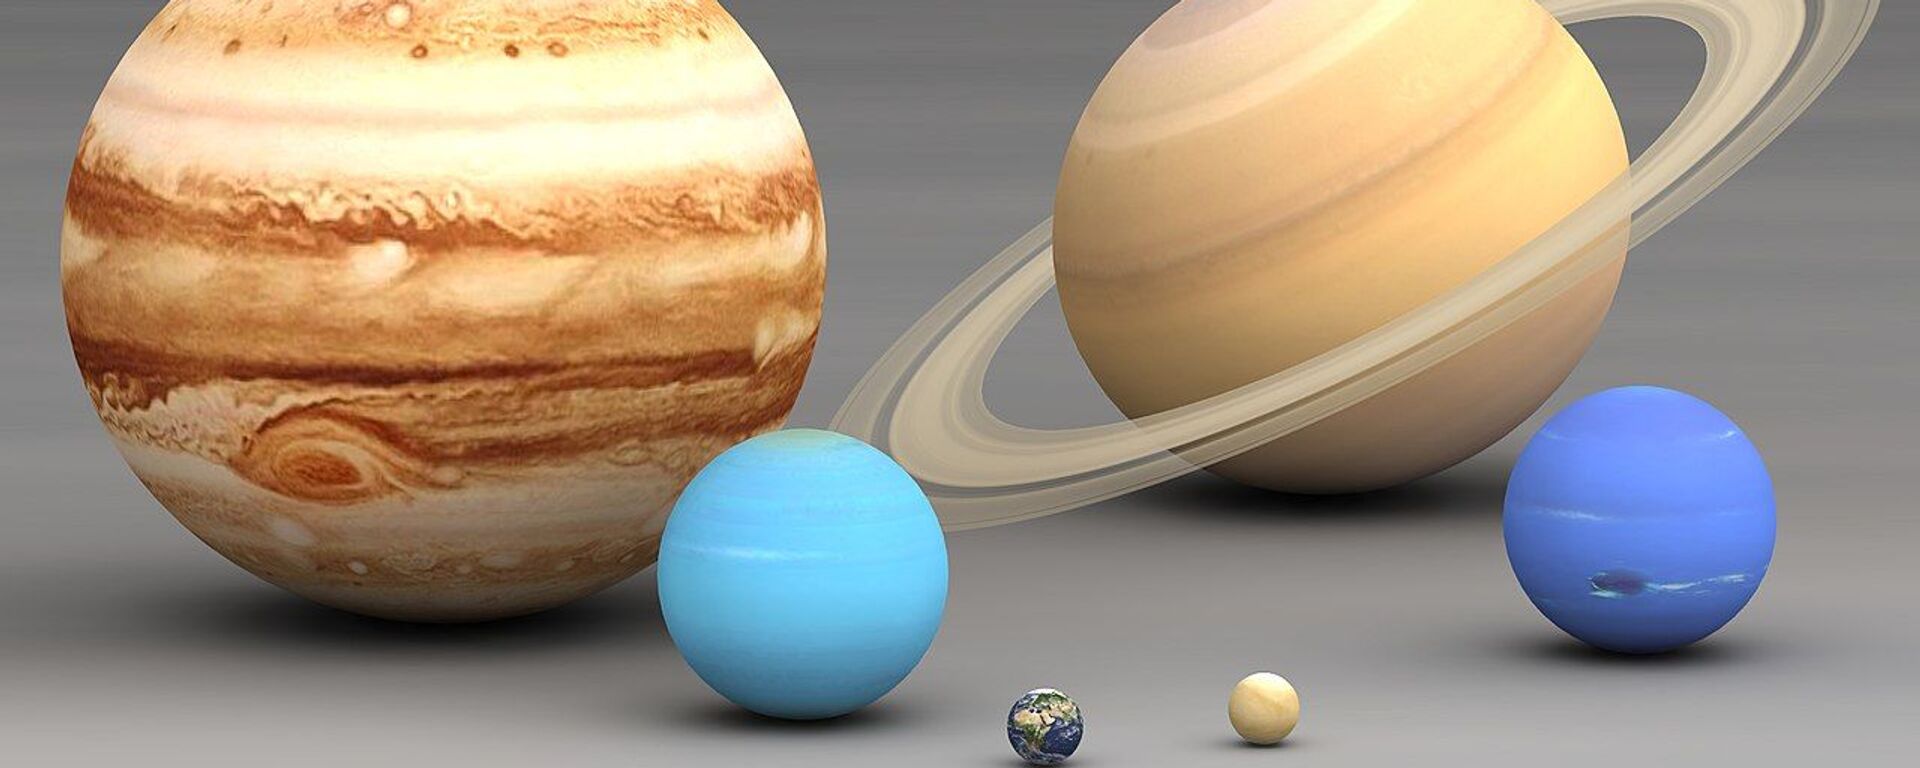 Solar system planets size comparison. Largest to smallest are pictured left to right, top to bottom: Jupiter, Saturn, Uranus, Neptune, Earth, Venus, Mars, Mercury - Sputnik International, 1920, 04.12.2020